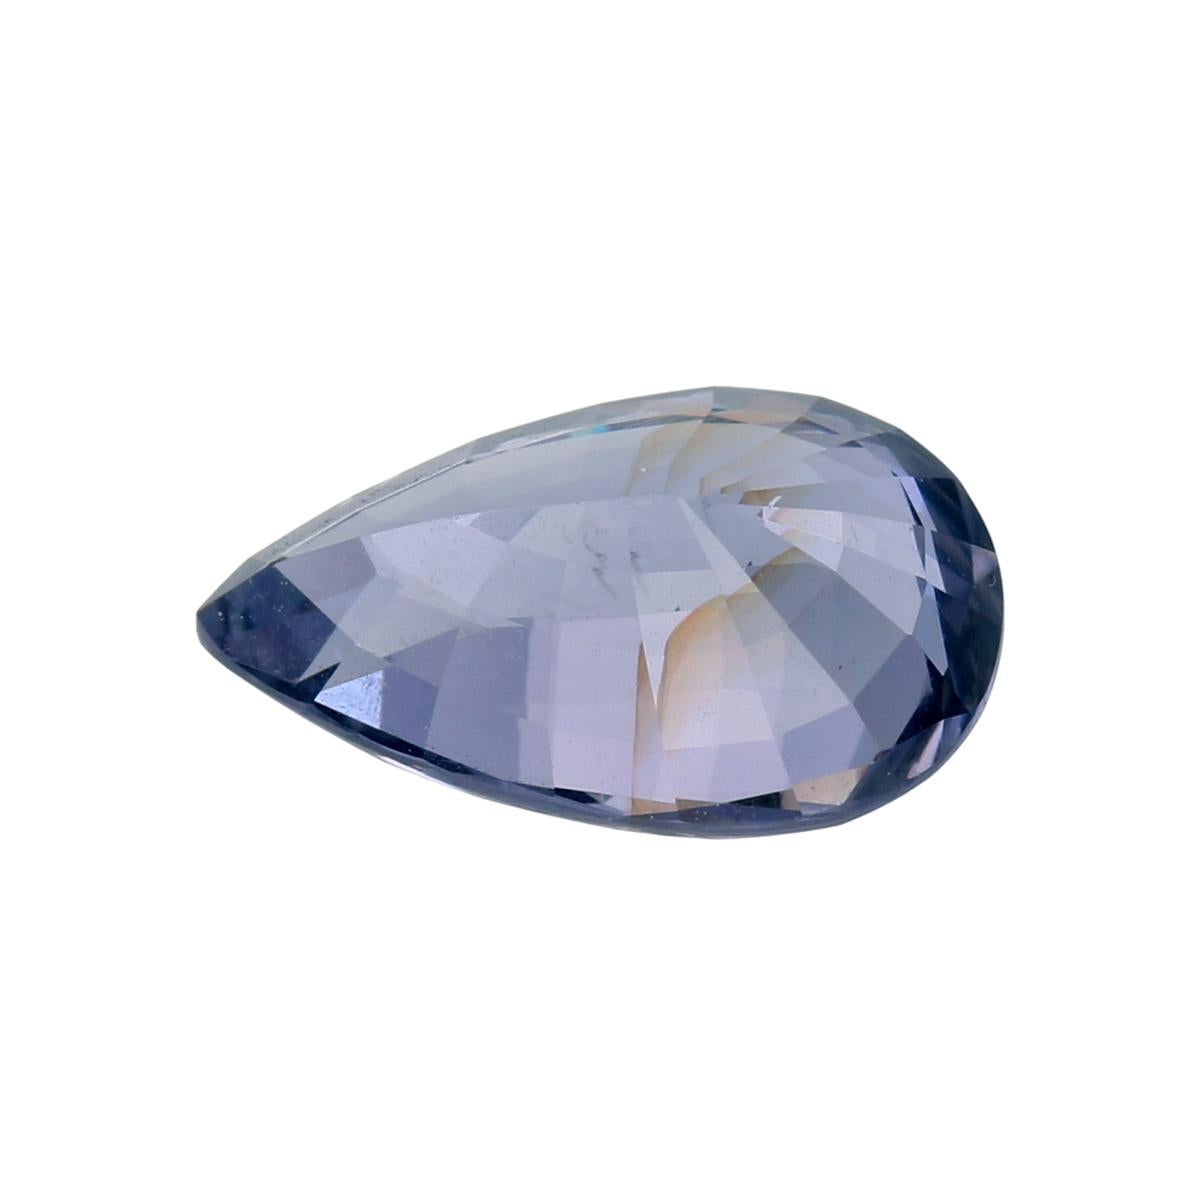 Lotus certified 3.58 carat Grayish Violet Spinel from Sri Lanka (Ceylon)
Pear shape 
Dimensions 12.33 x 7.77 x 5.65 mm
Lotus certificate 3547-8775  pin 594722
No heat untreated

